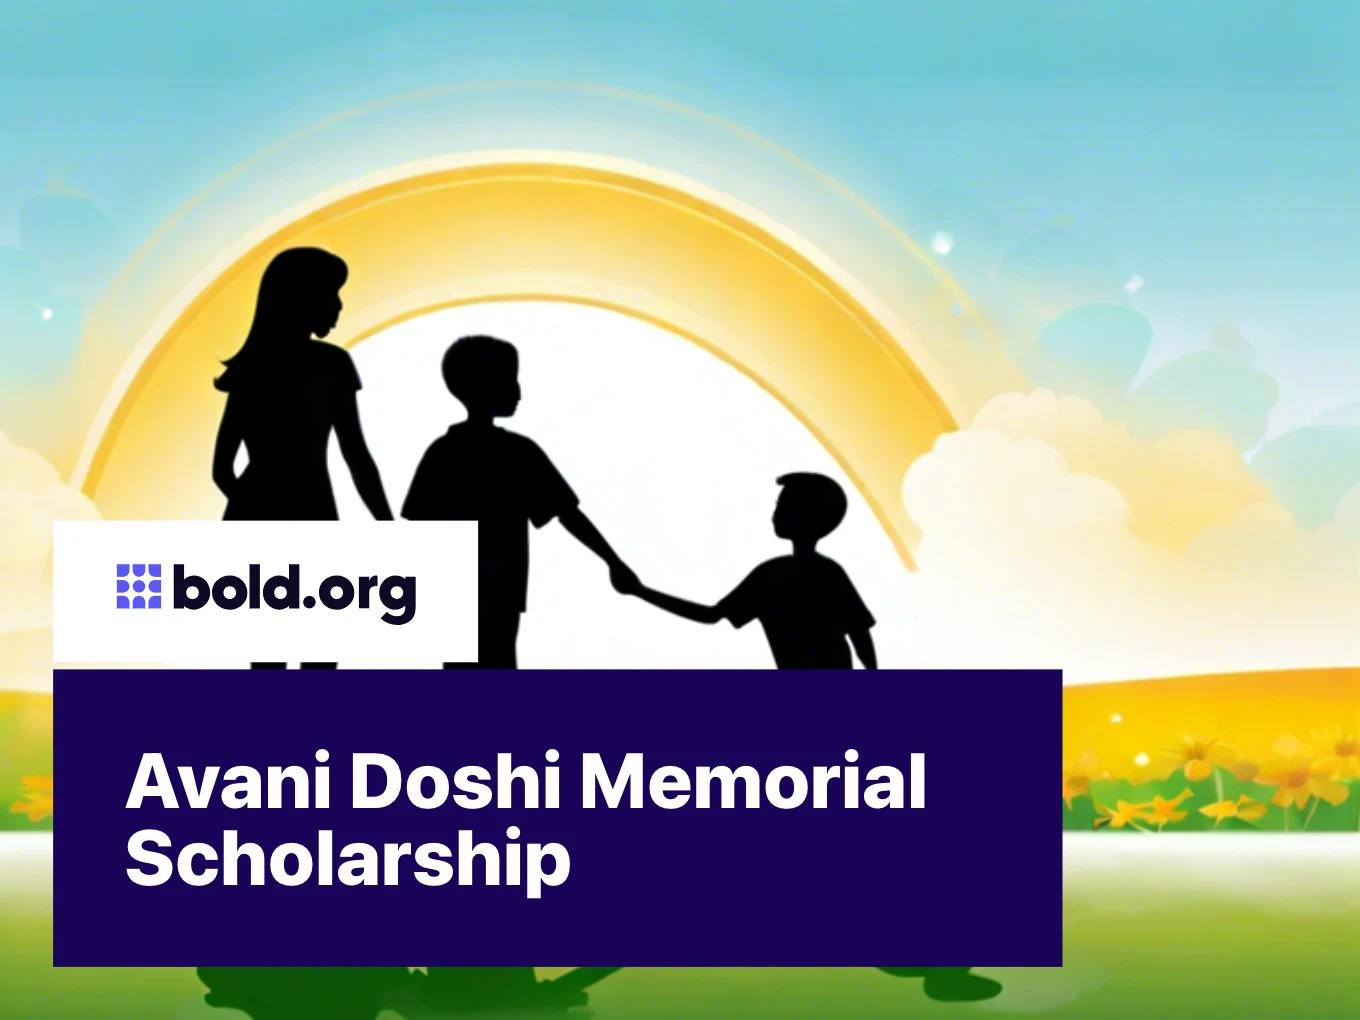 Avani Doshi Memorial Scholarship